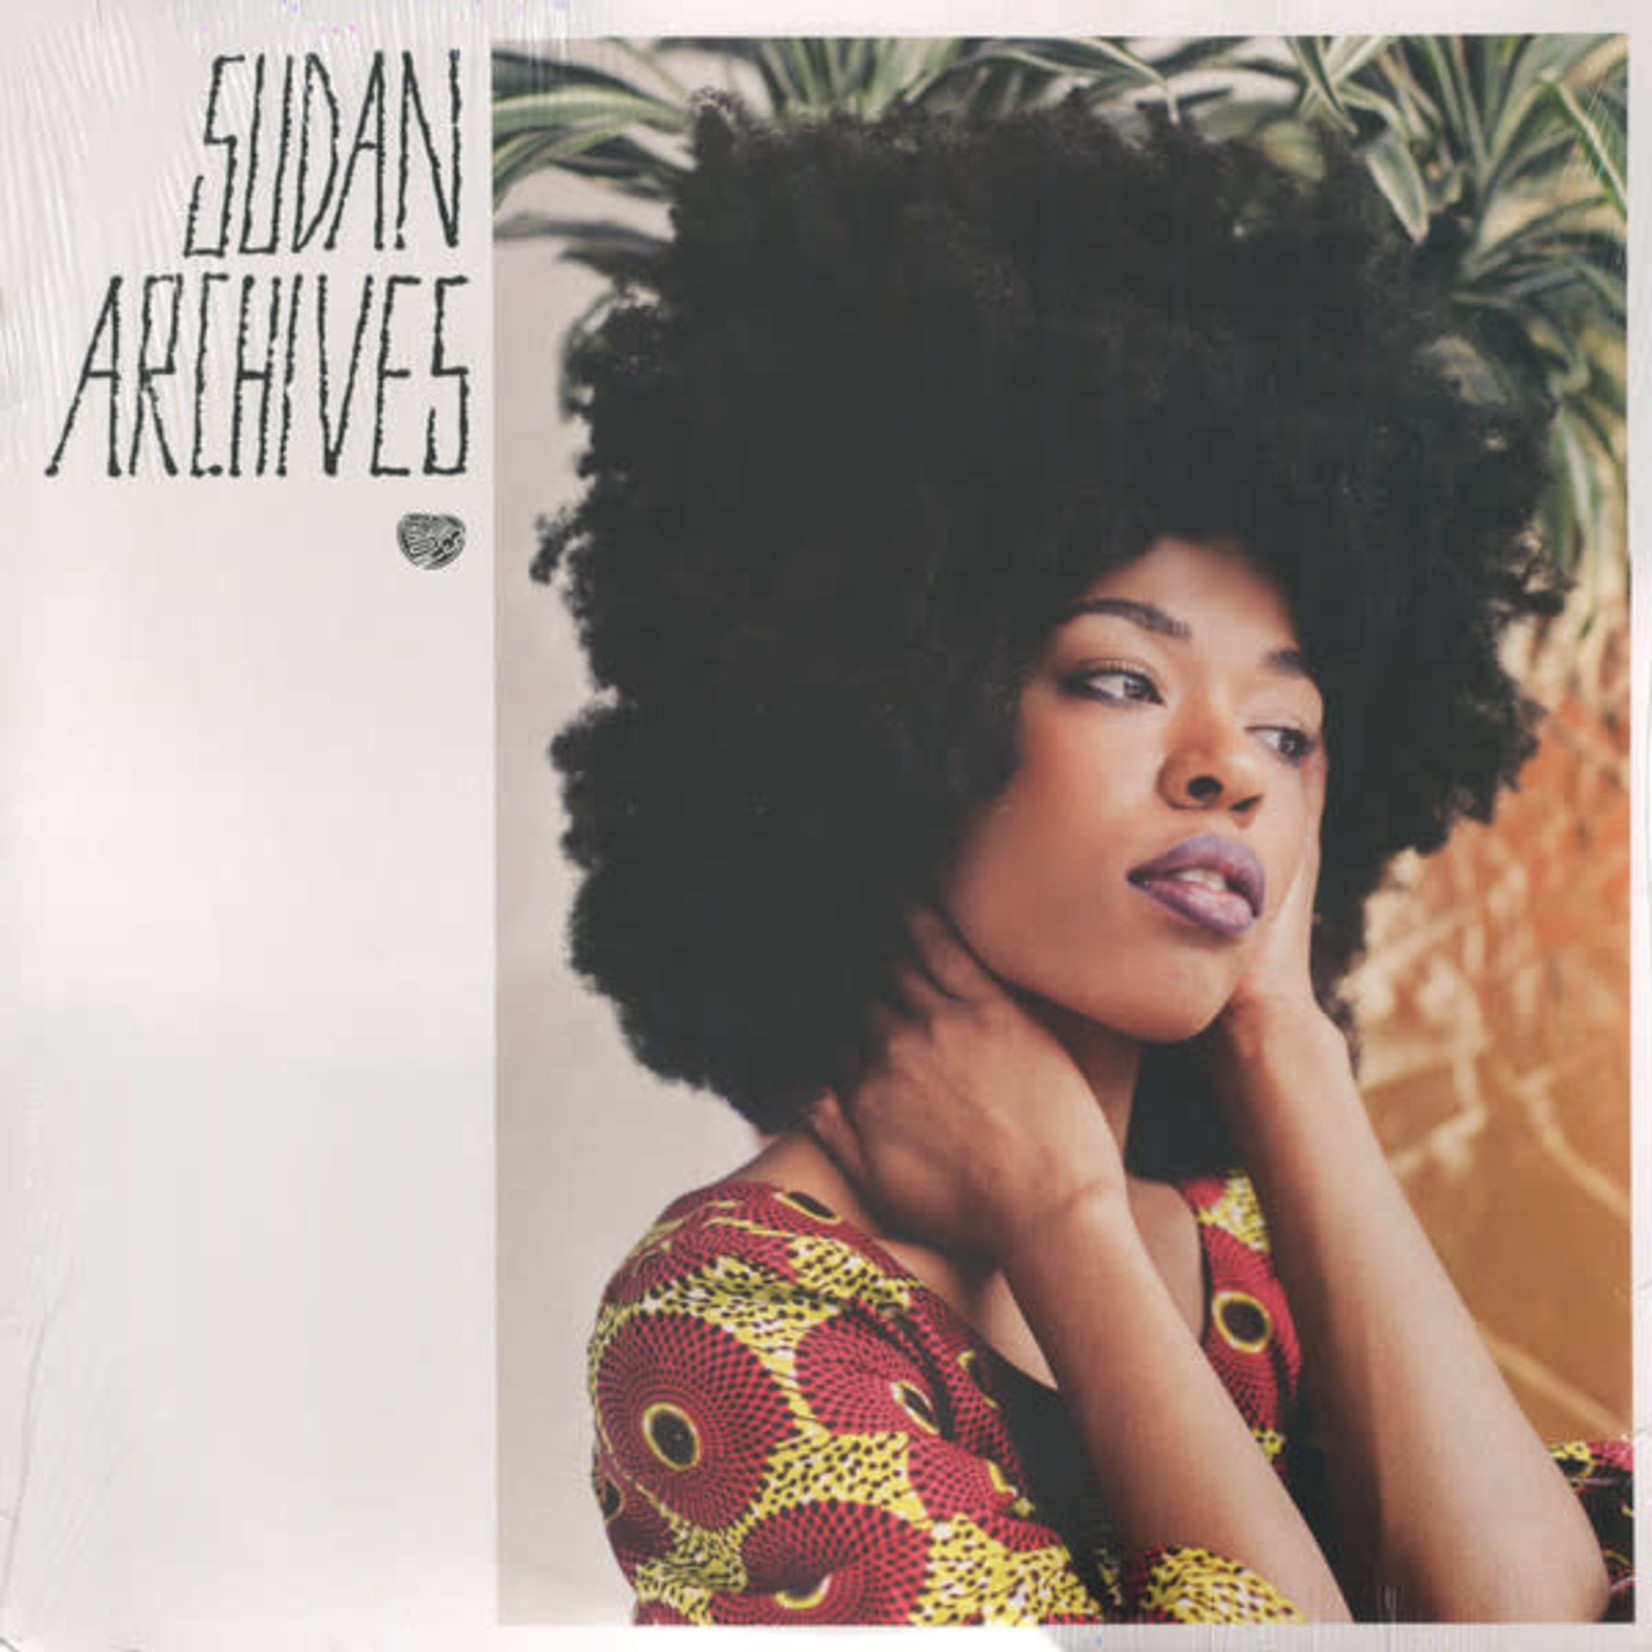 [New] Sudan Archives: Sudan Archives EP (12'') [STONES THROW]